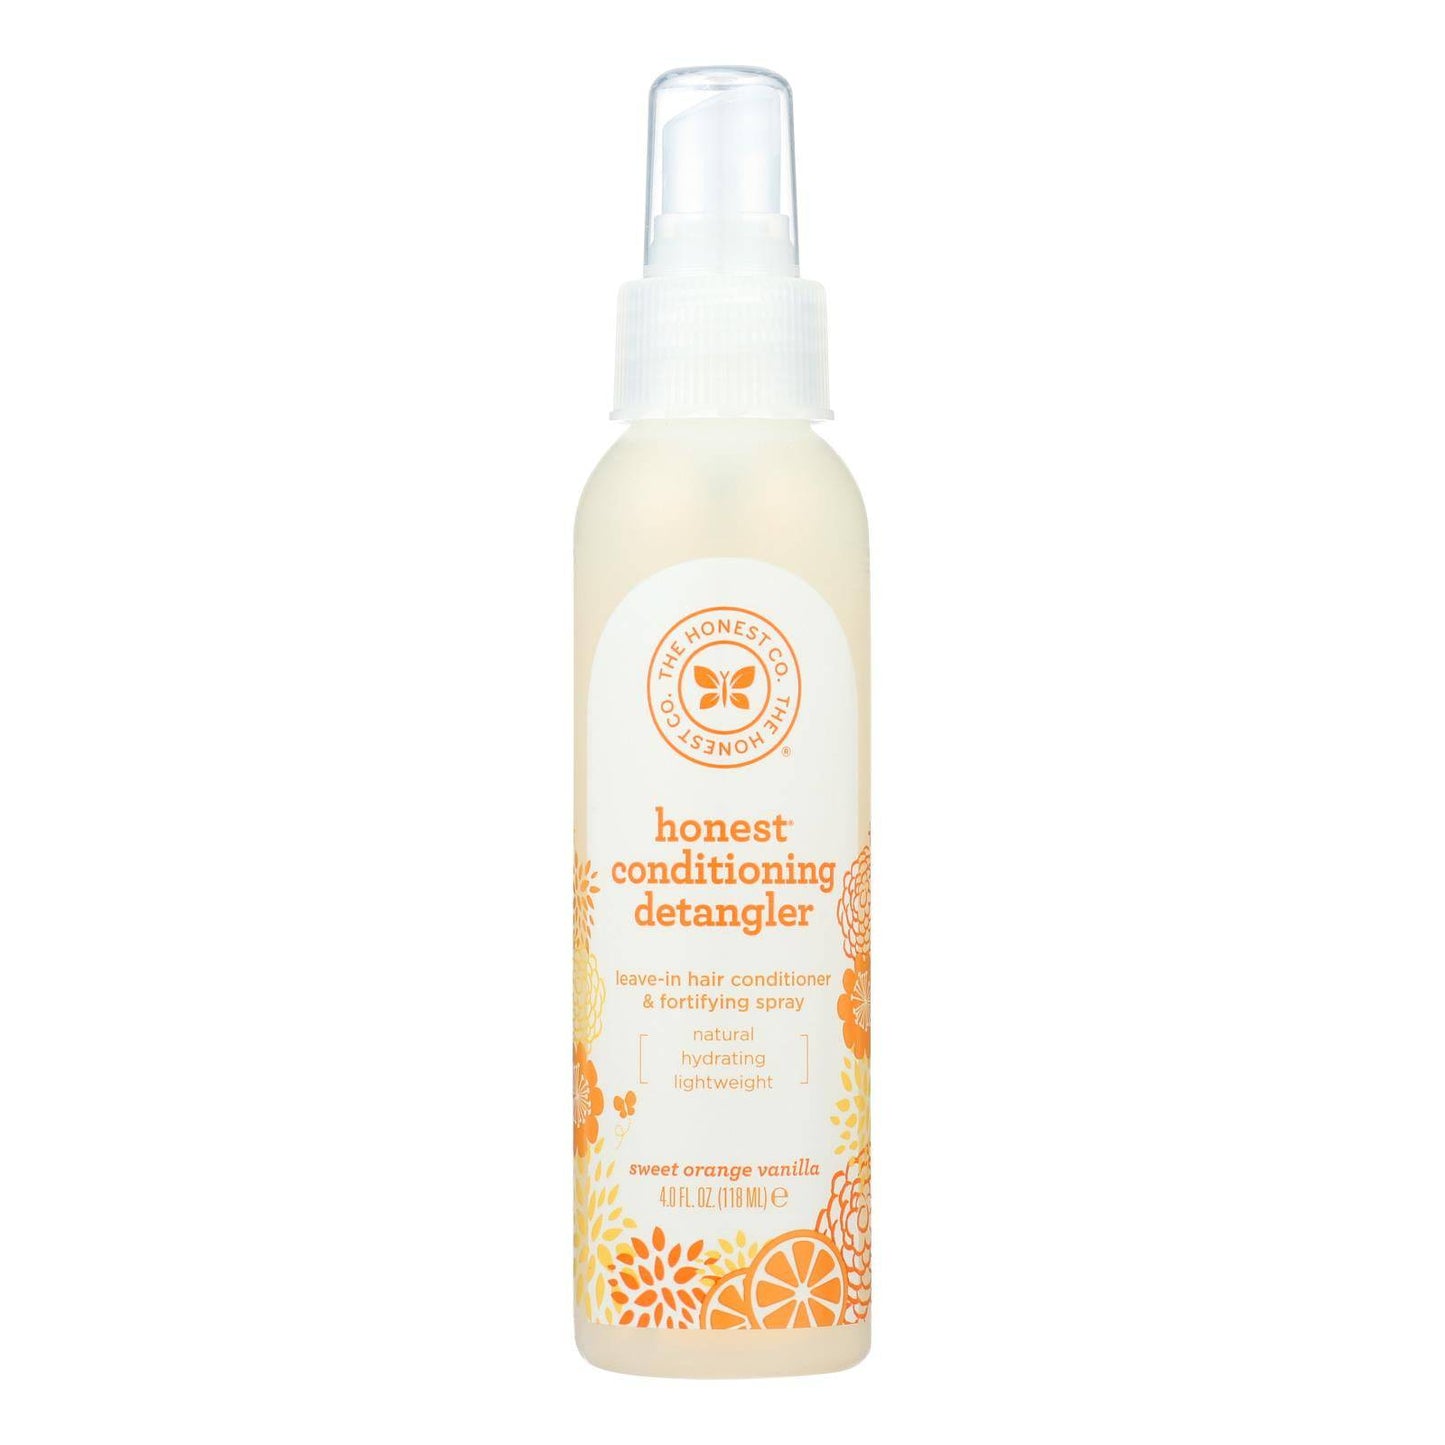 Buy The Honest Company Honest Conditioning Detangler - Sweet Orange Vanilla - 4 Oz  at OnlyNaturals.us